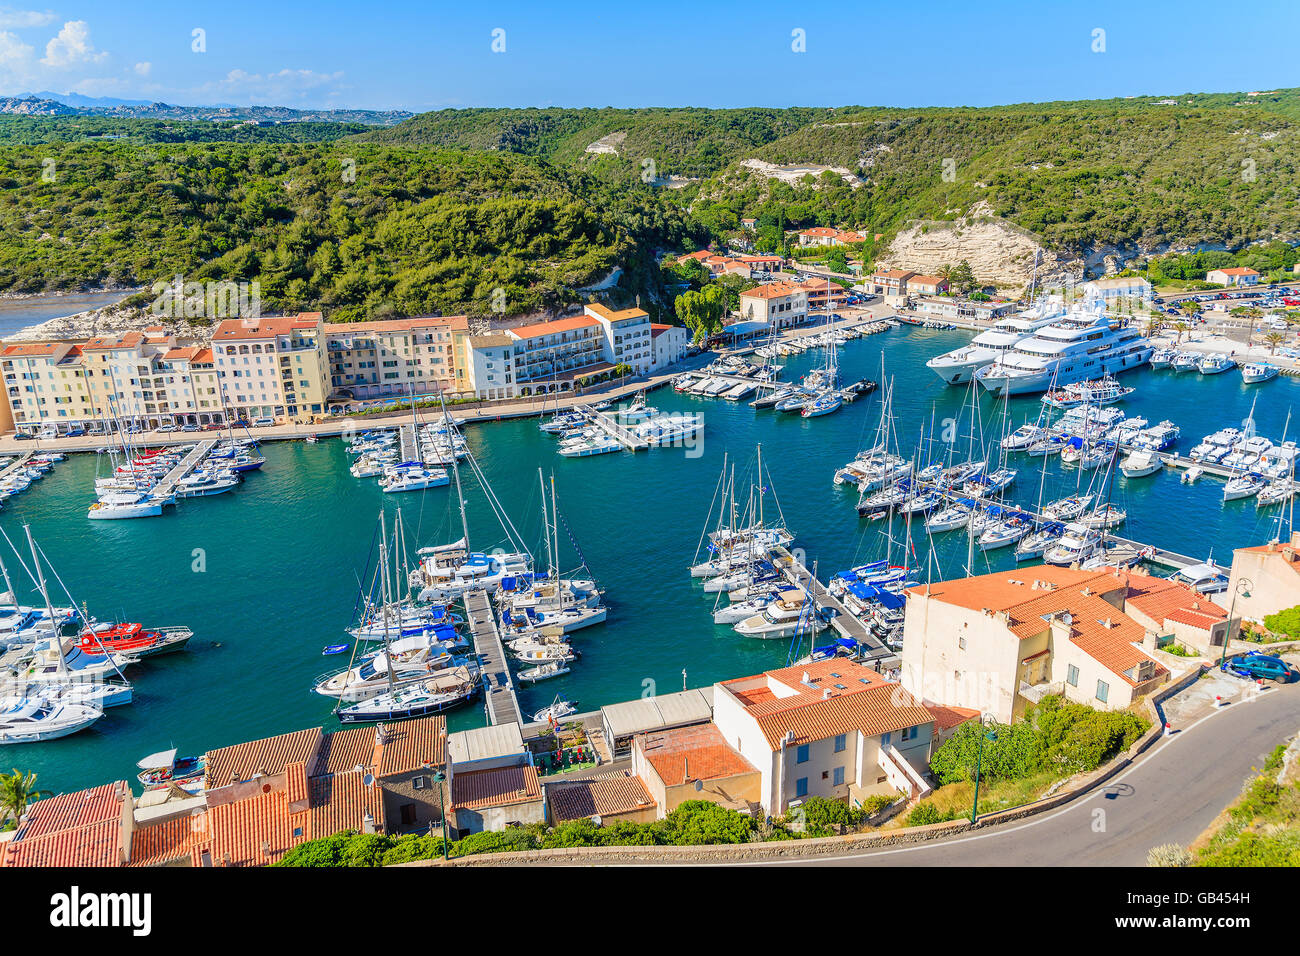 BONIFACIO PORT, CORSICA ISLAND - JUN 24, 2015: View of Bonifacio port with colorful houses and boats, Corsica island, France. Stock Photo